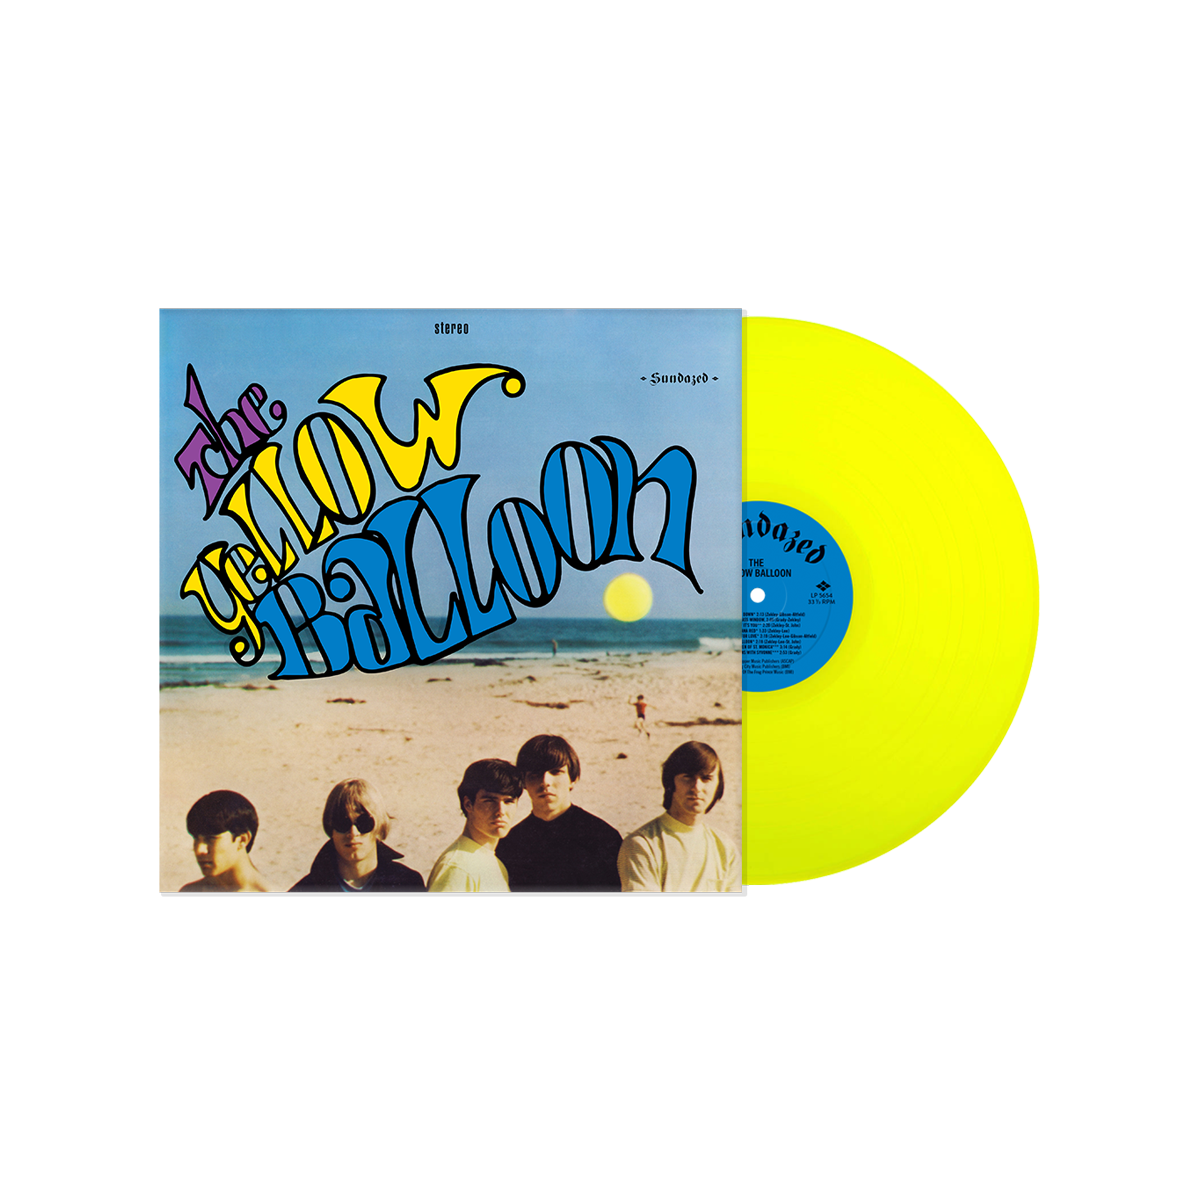 The Yellow Balloon: Limited Yellow Vinyl LP